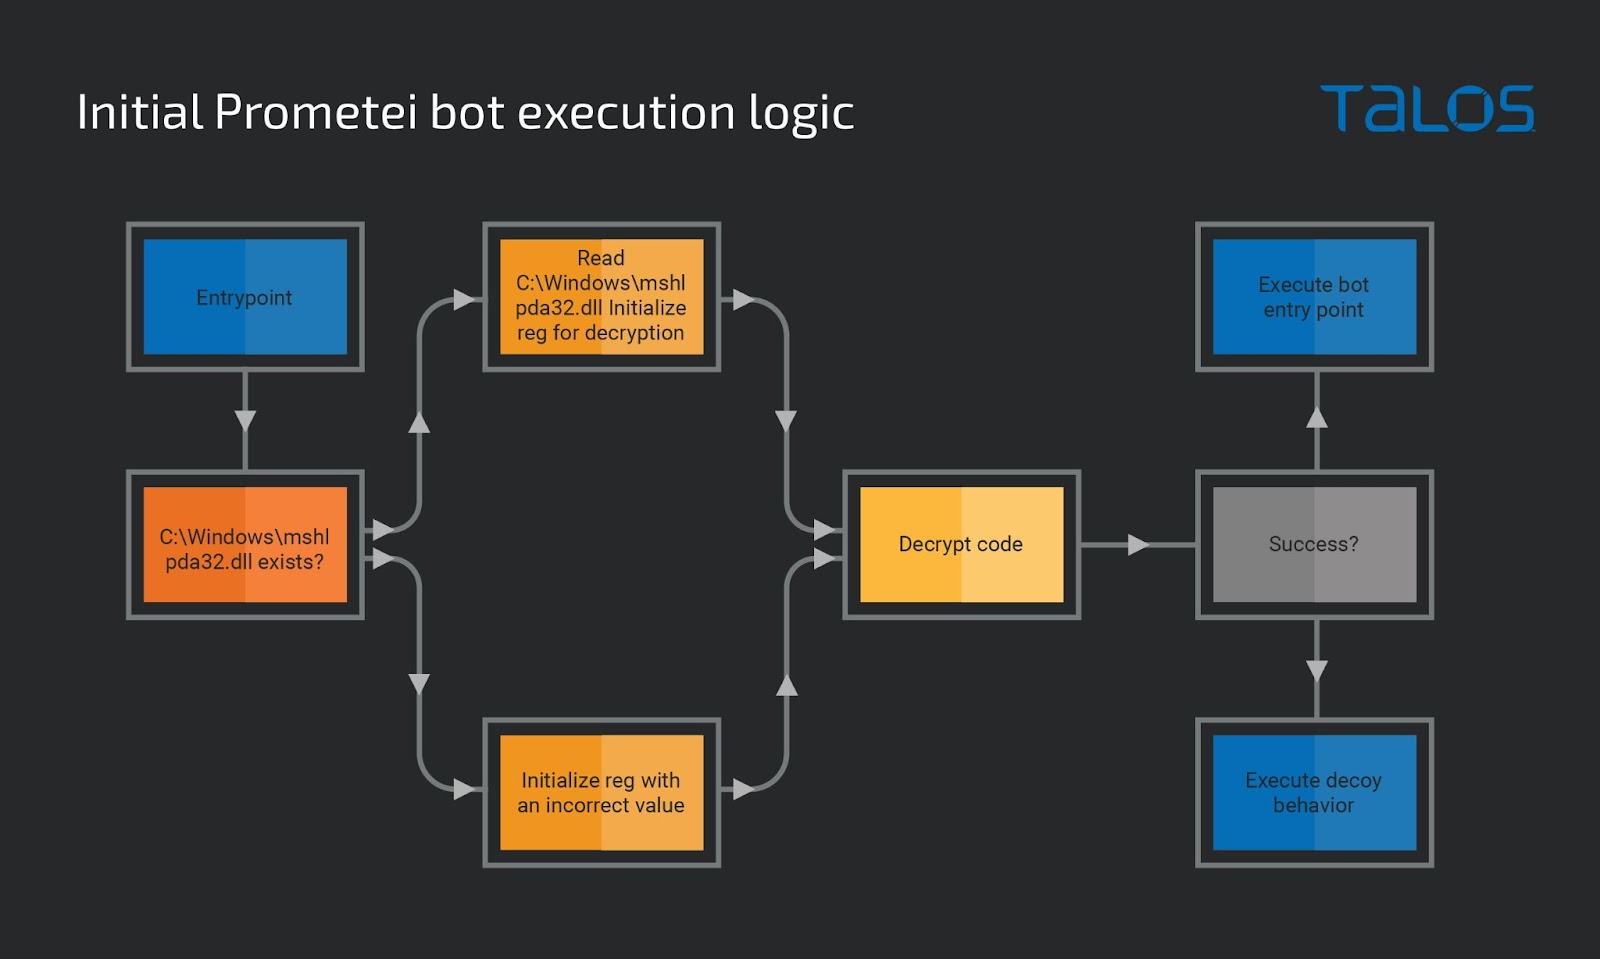 Prometei botnet improves modules and exhibits new capabilities in recent updates